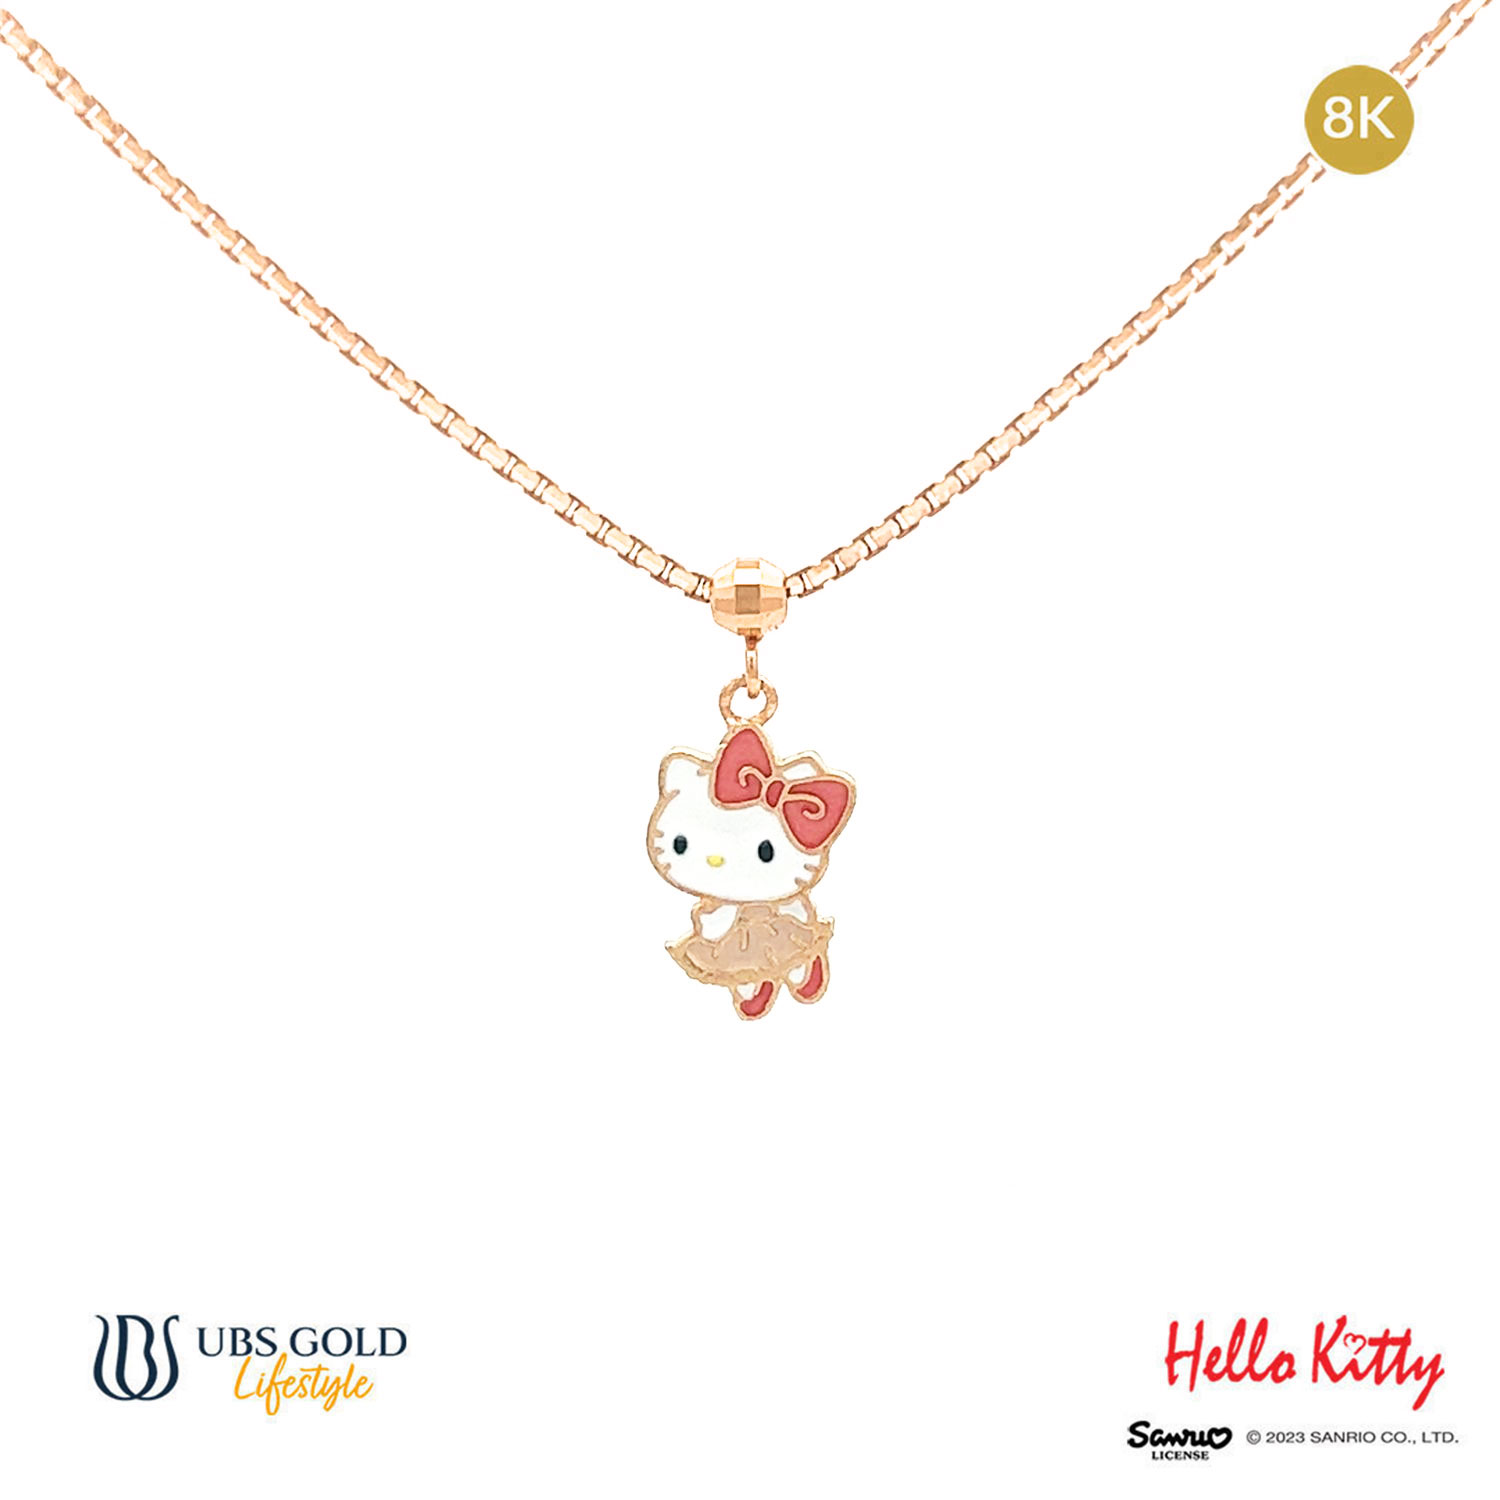 UBS Kalung Emas Anak Sanrio Hello Kitty - Kkz0087K - 8K